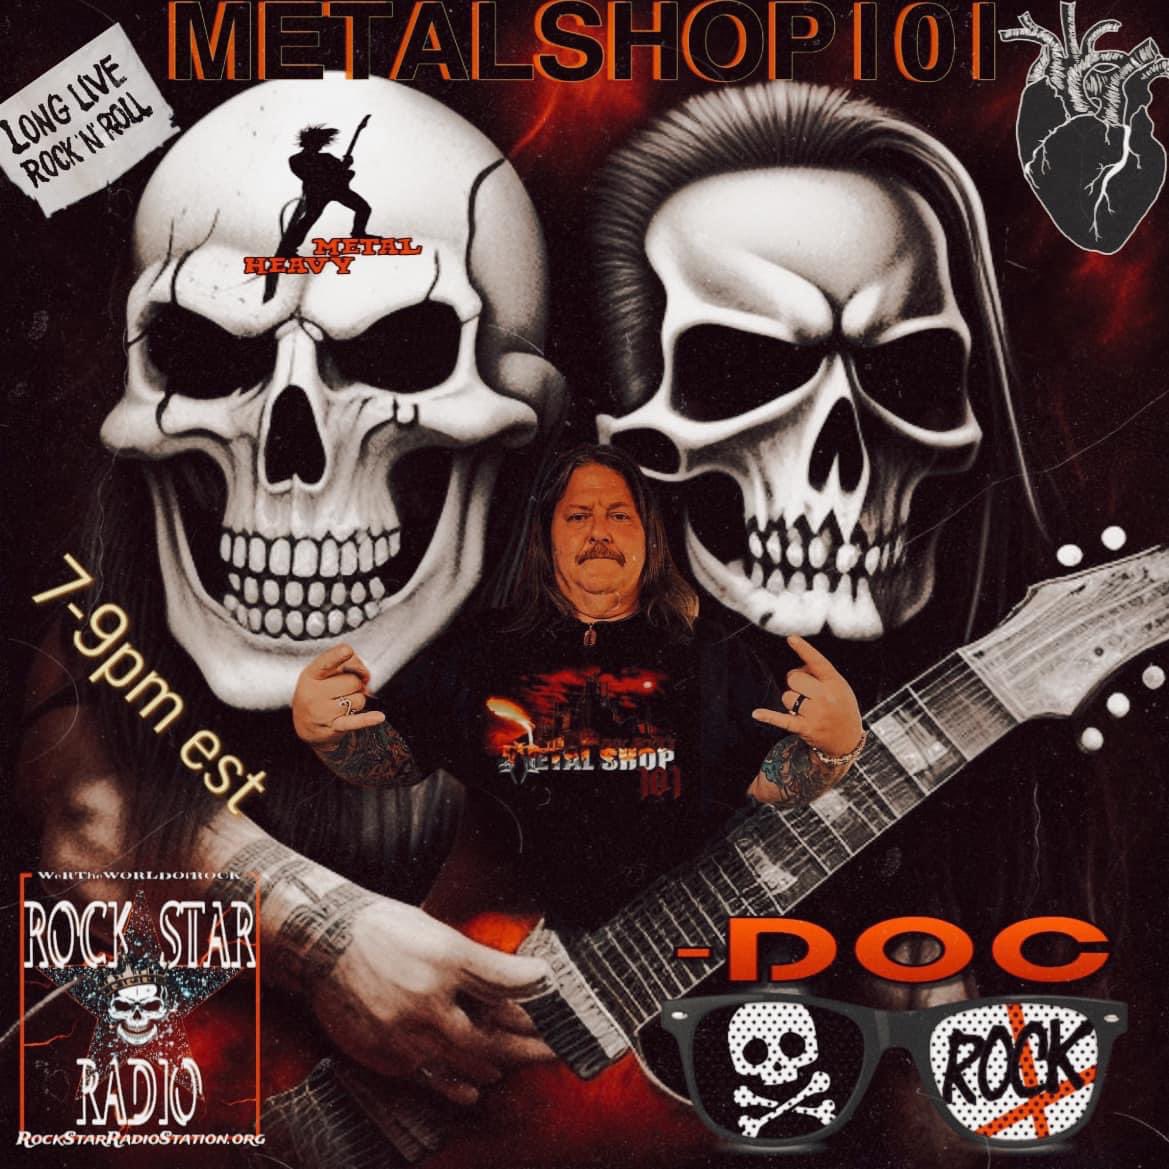 Up next after #TheMetalMistressShow 7pm est #MetalShop101 rockstarradiostation.org